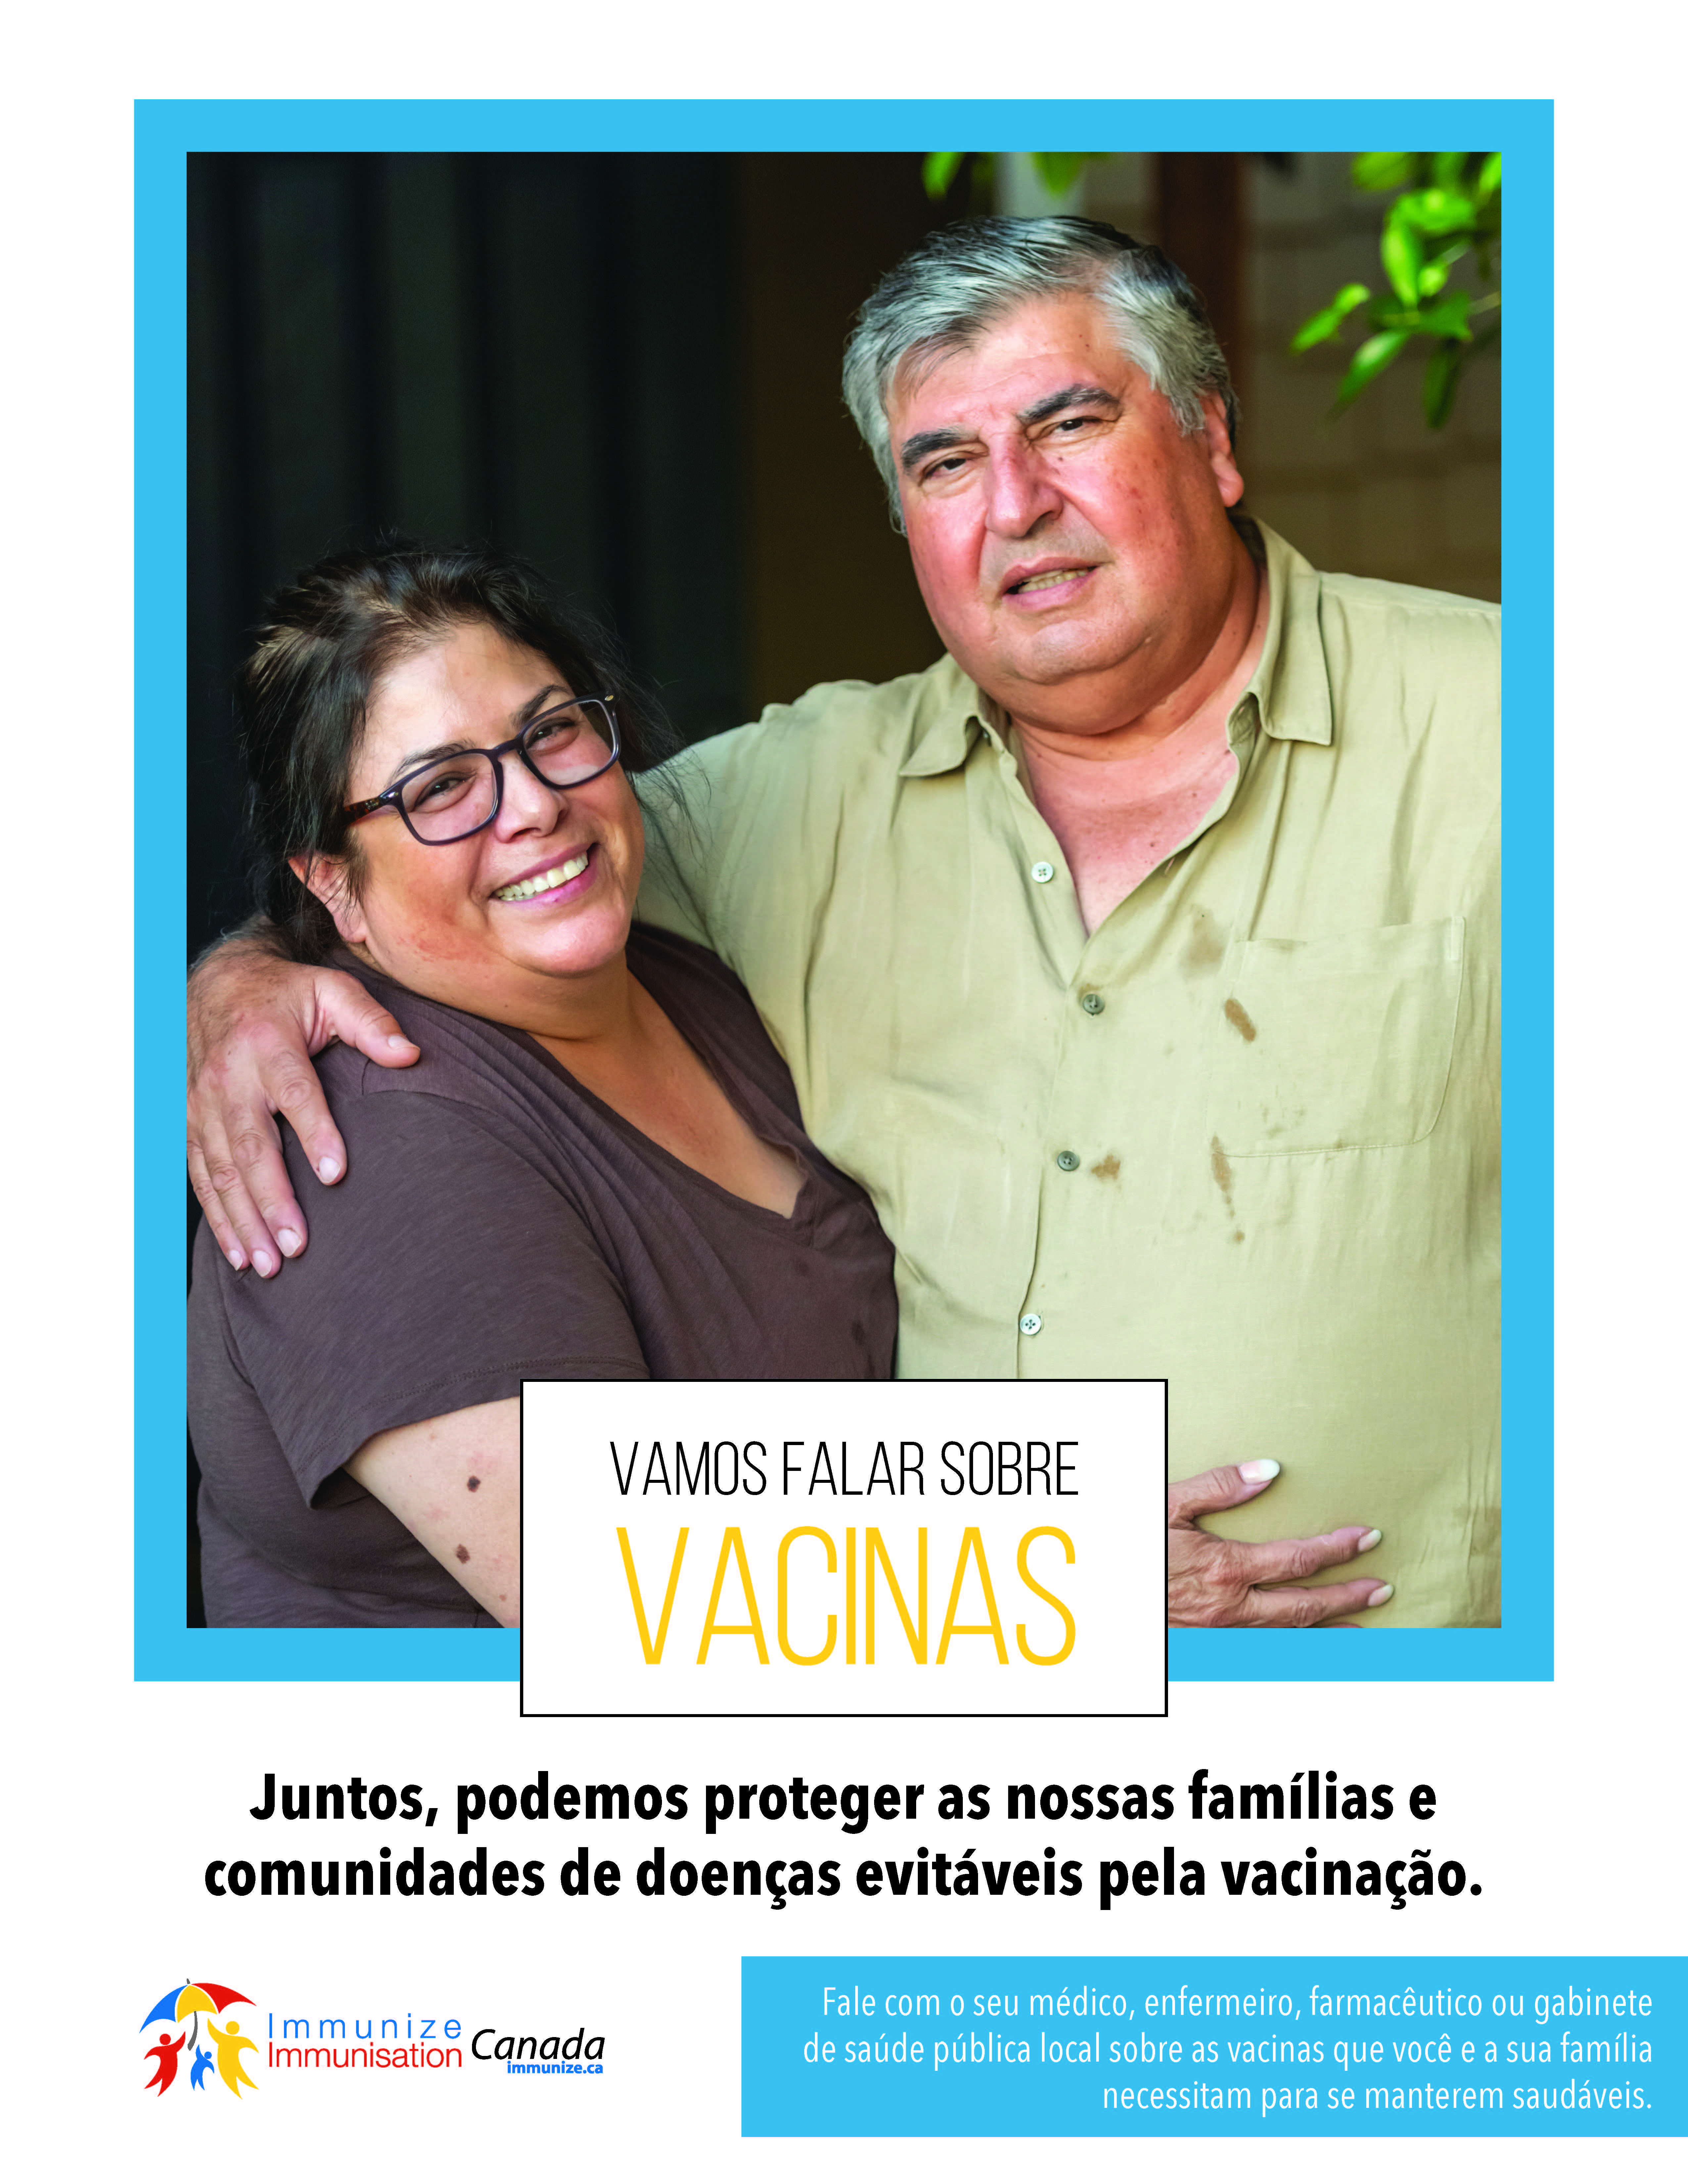 Let's talk about vaccines (Portuguese)